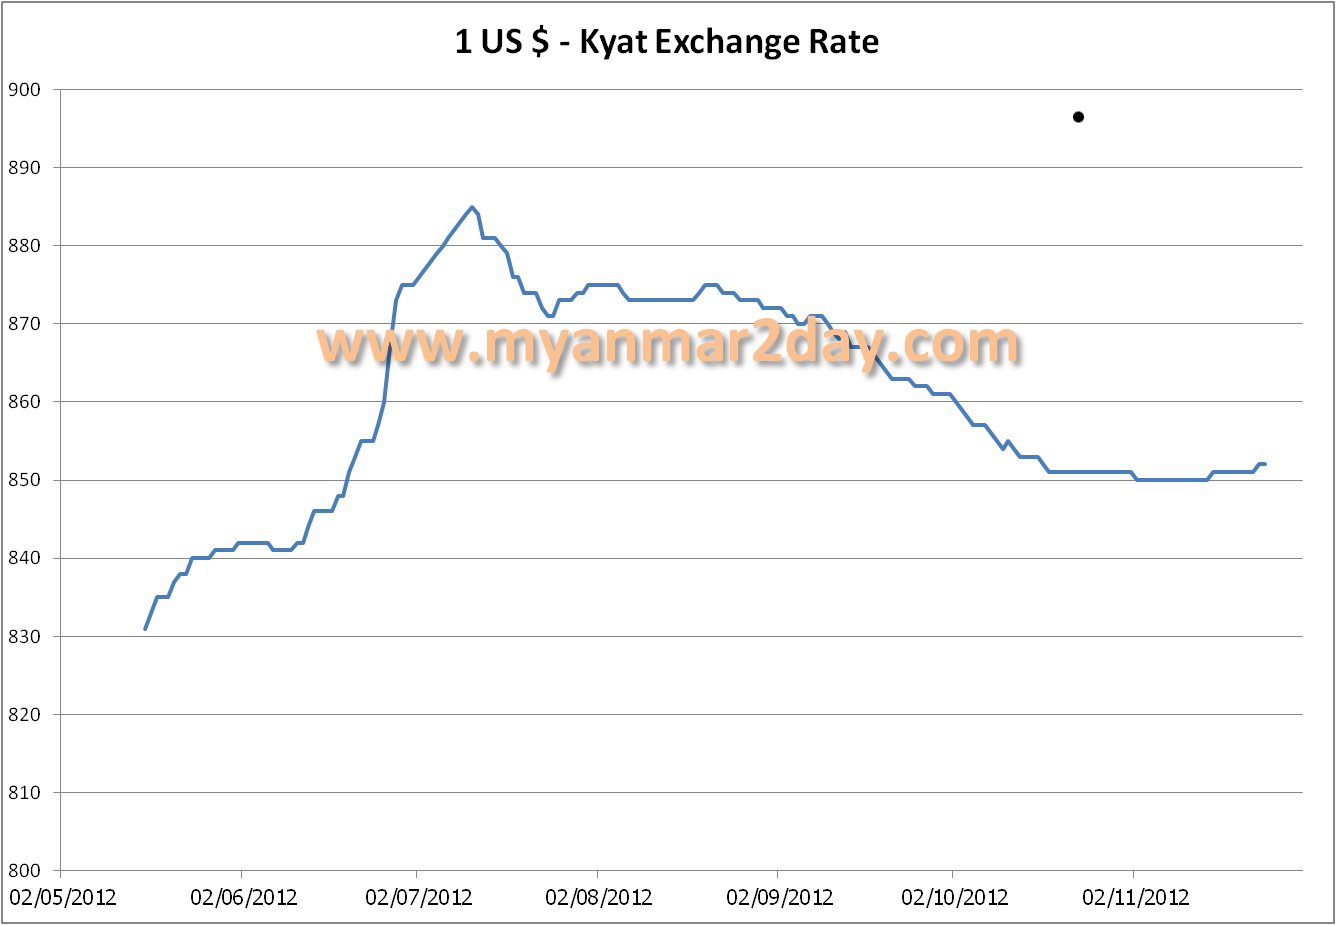 Performance of Myanmar Kyat over US dollar